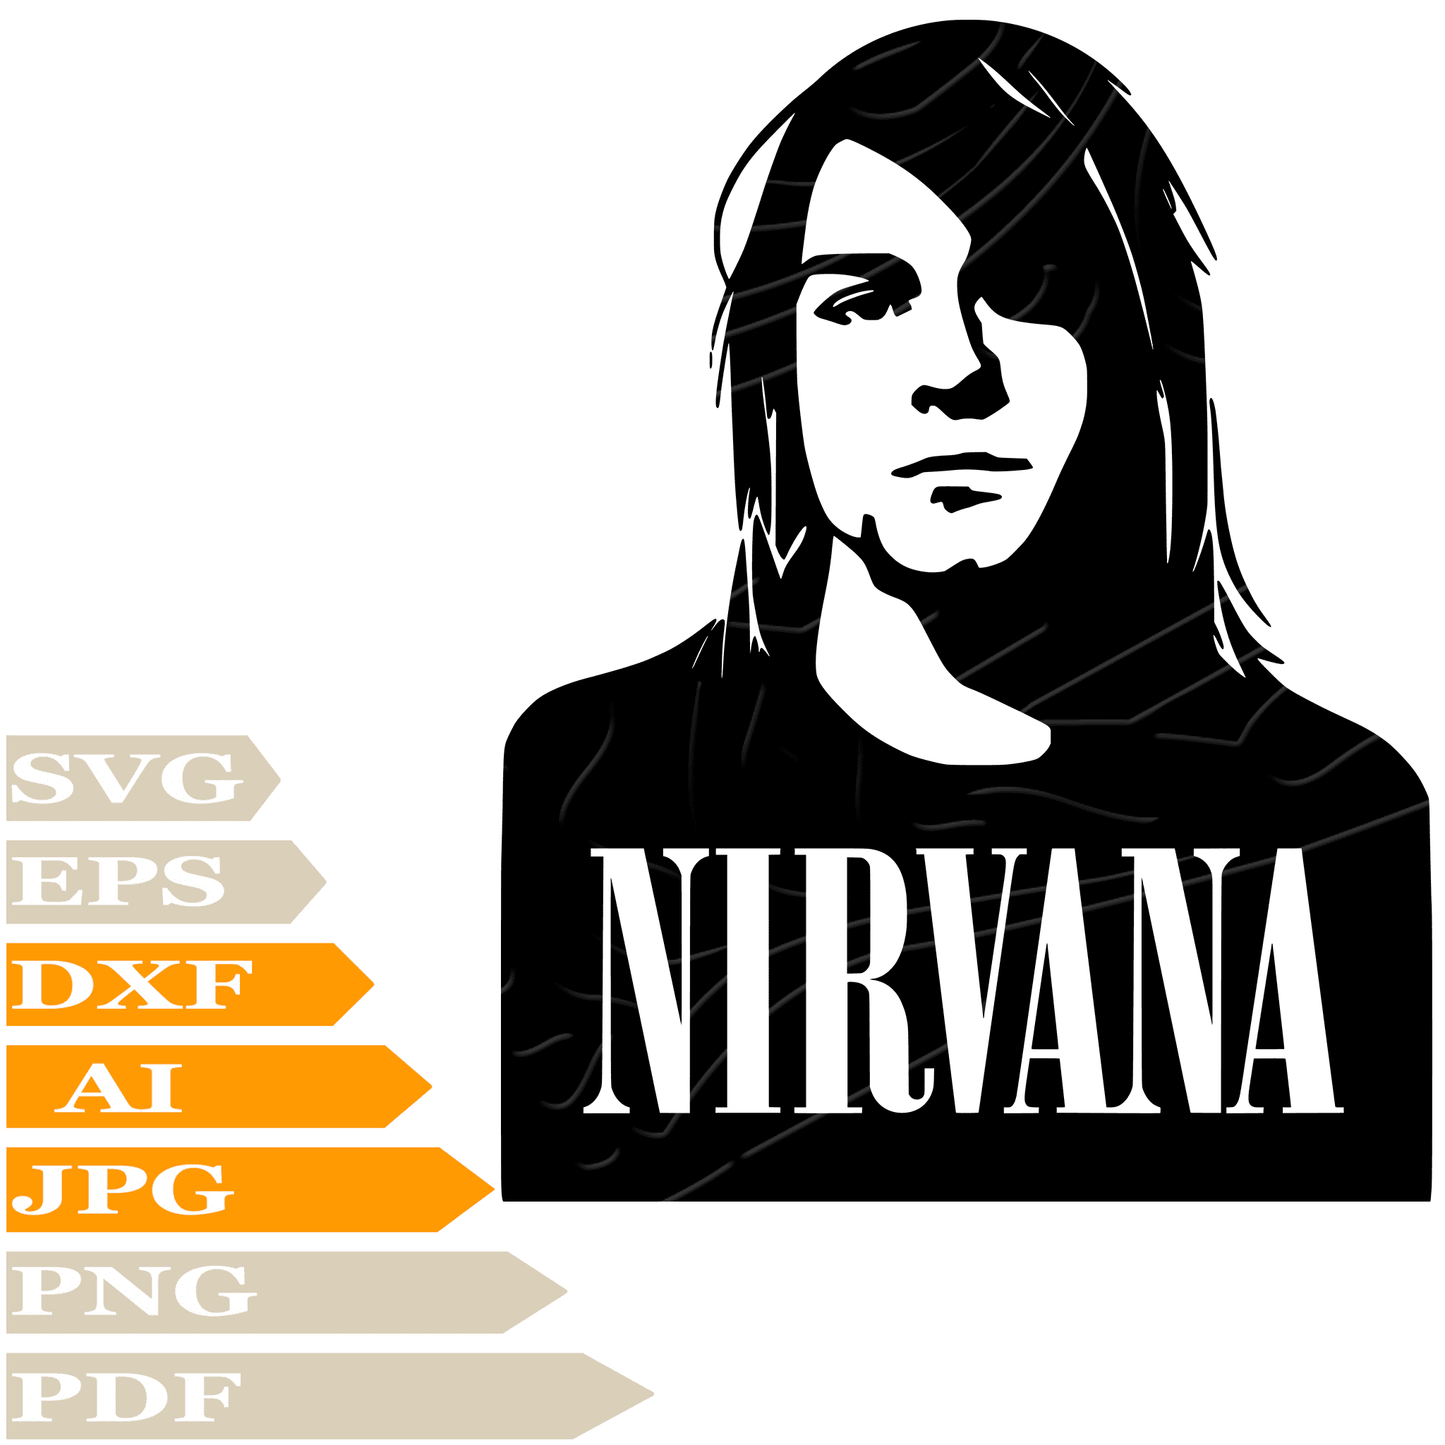 Kurt Cobain SVG File, Kurt Cobain Face SVG Design, Kurt Cobain Nirvana SVG Cricut, Kurt Cobain Digital Vector, PNG, Image Cut, Clipart, Cut File, Print, Decal, Shirt, Silhouette